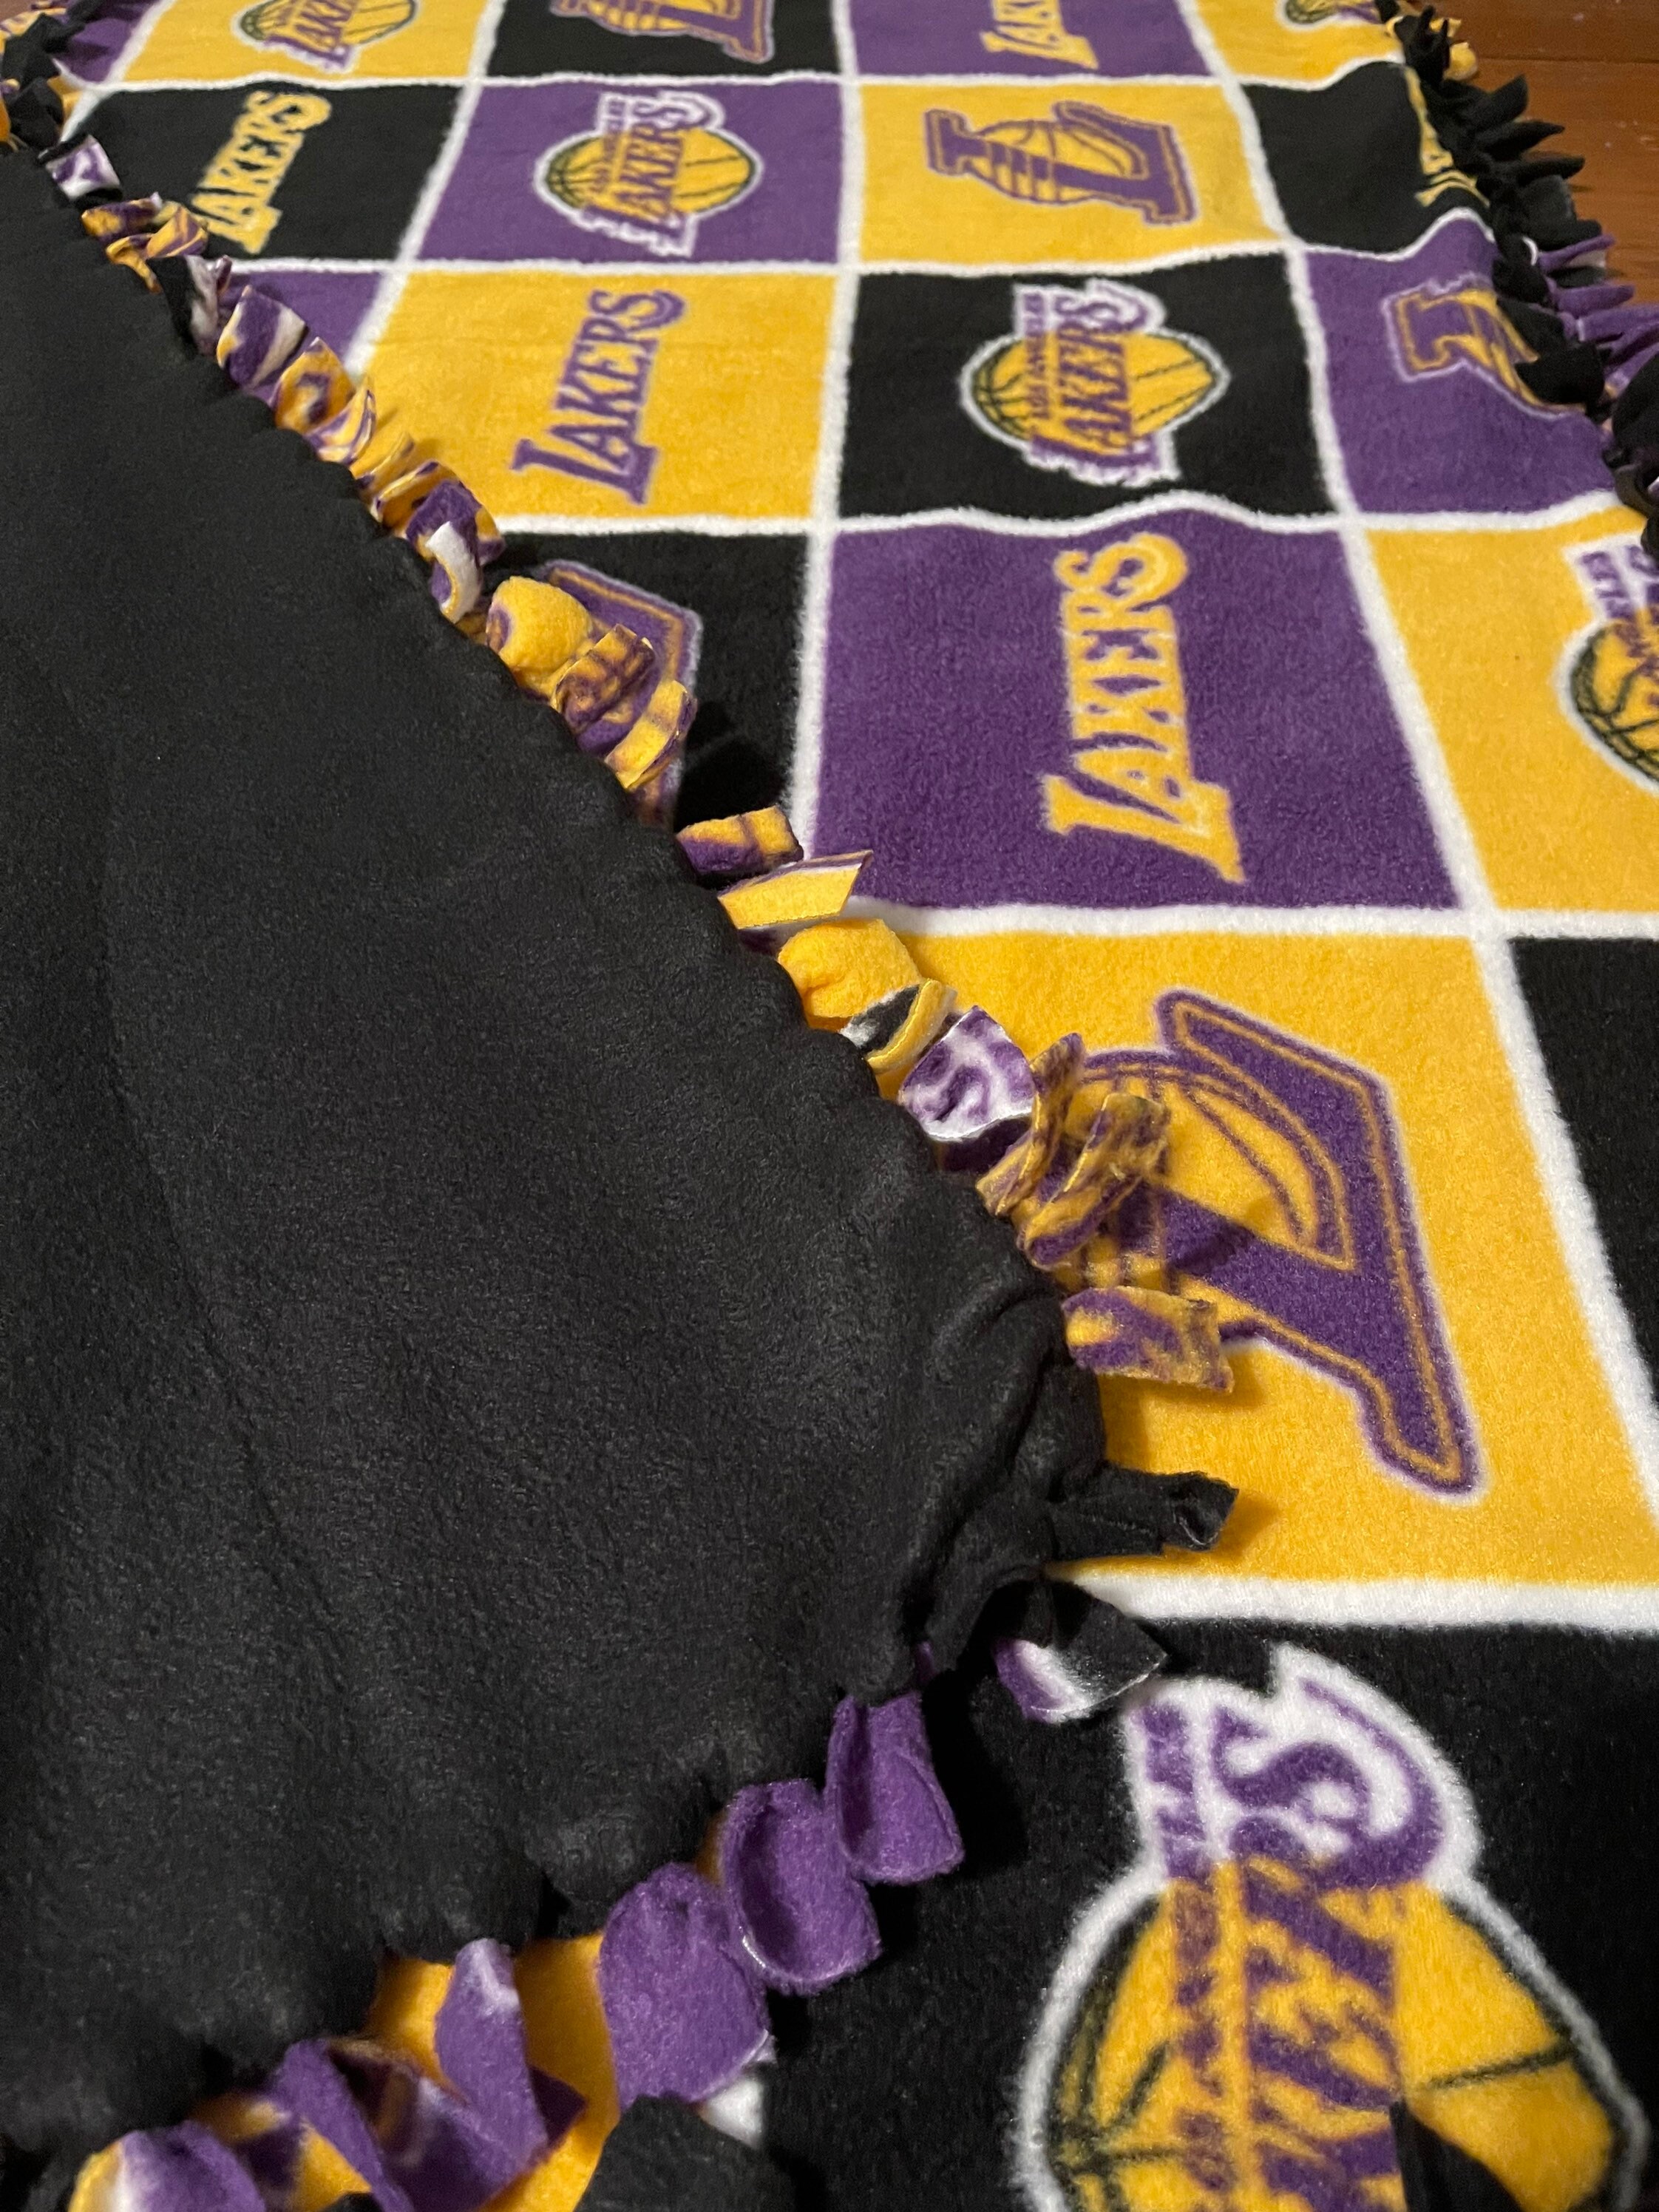 Los Angeles Lakers Fleece Newborn Infant Baby Receiving Blanket & Hat  Gift Set